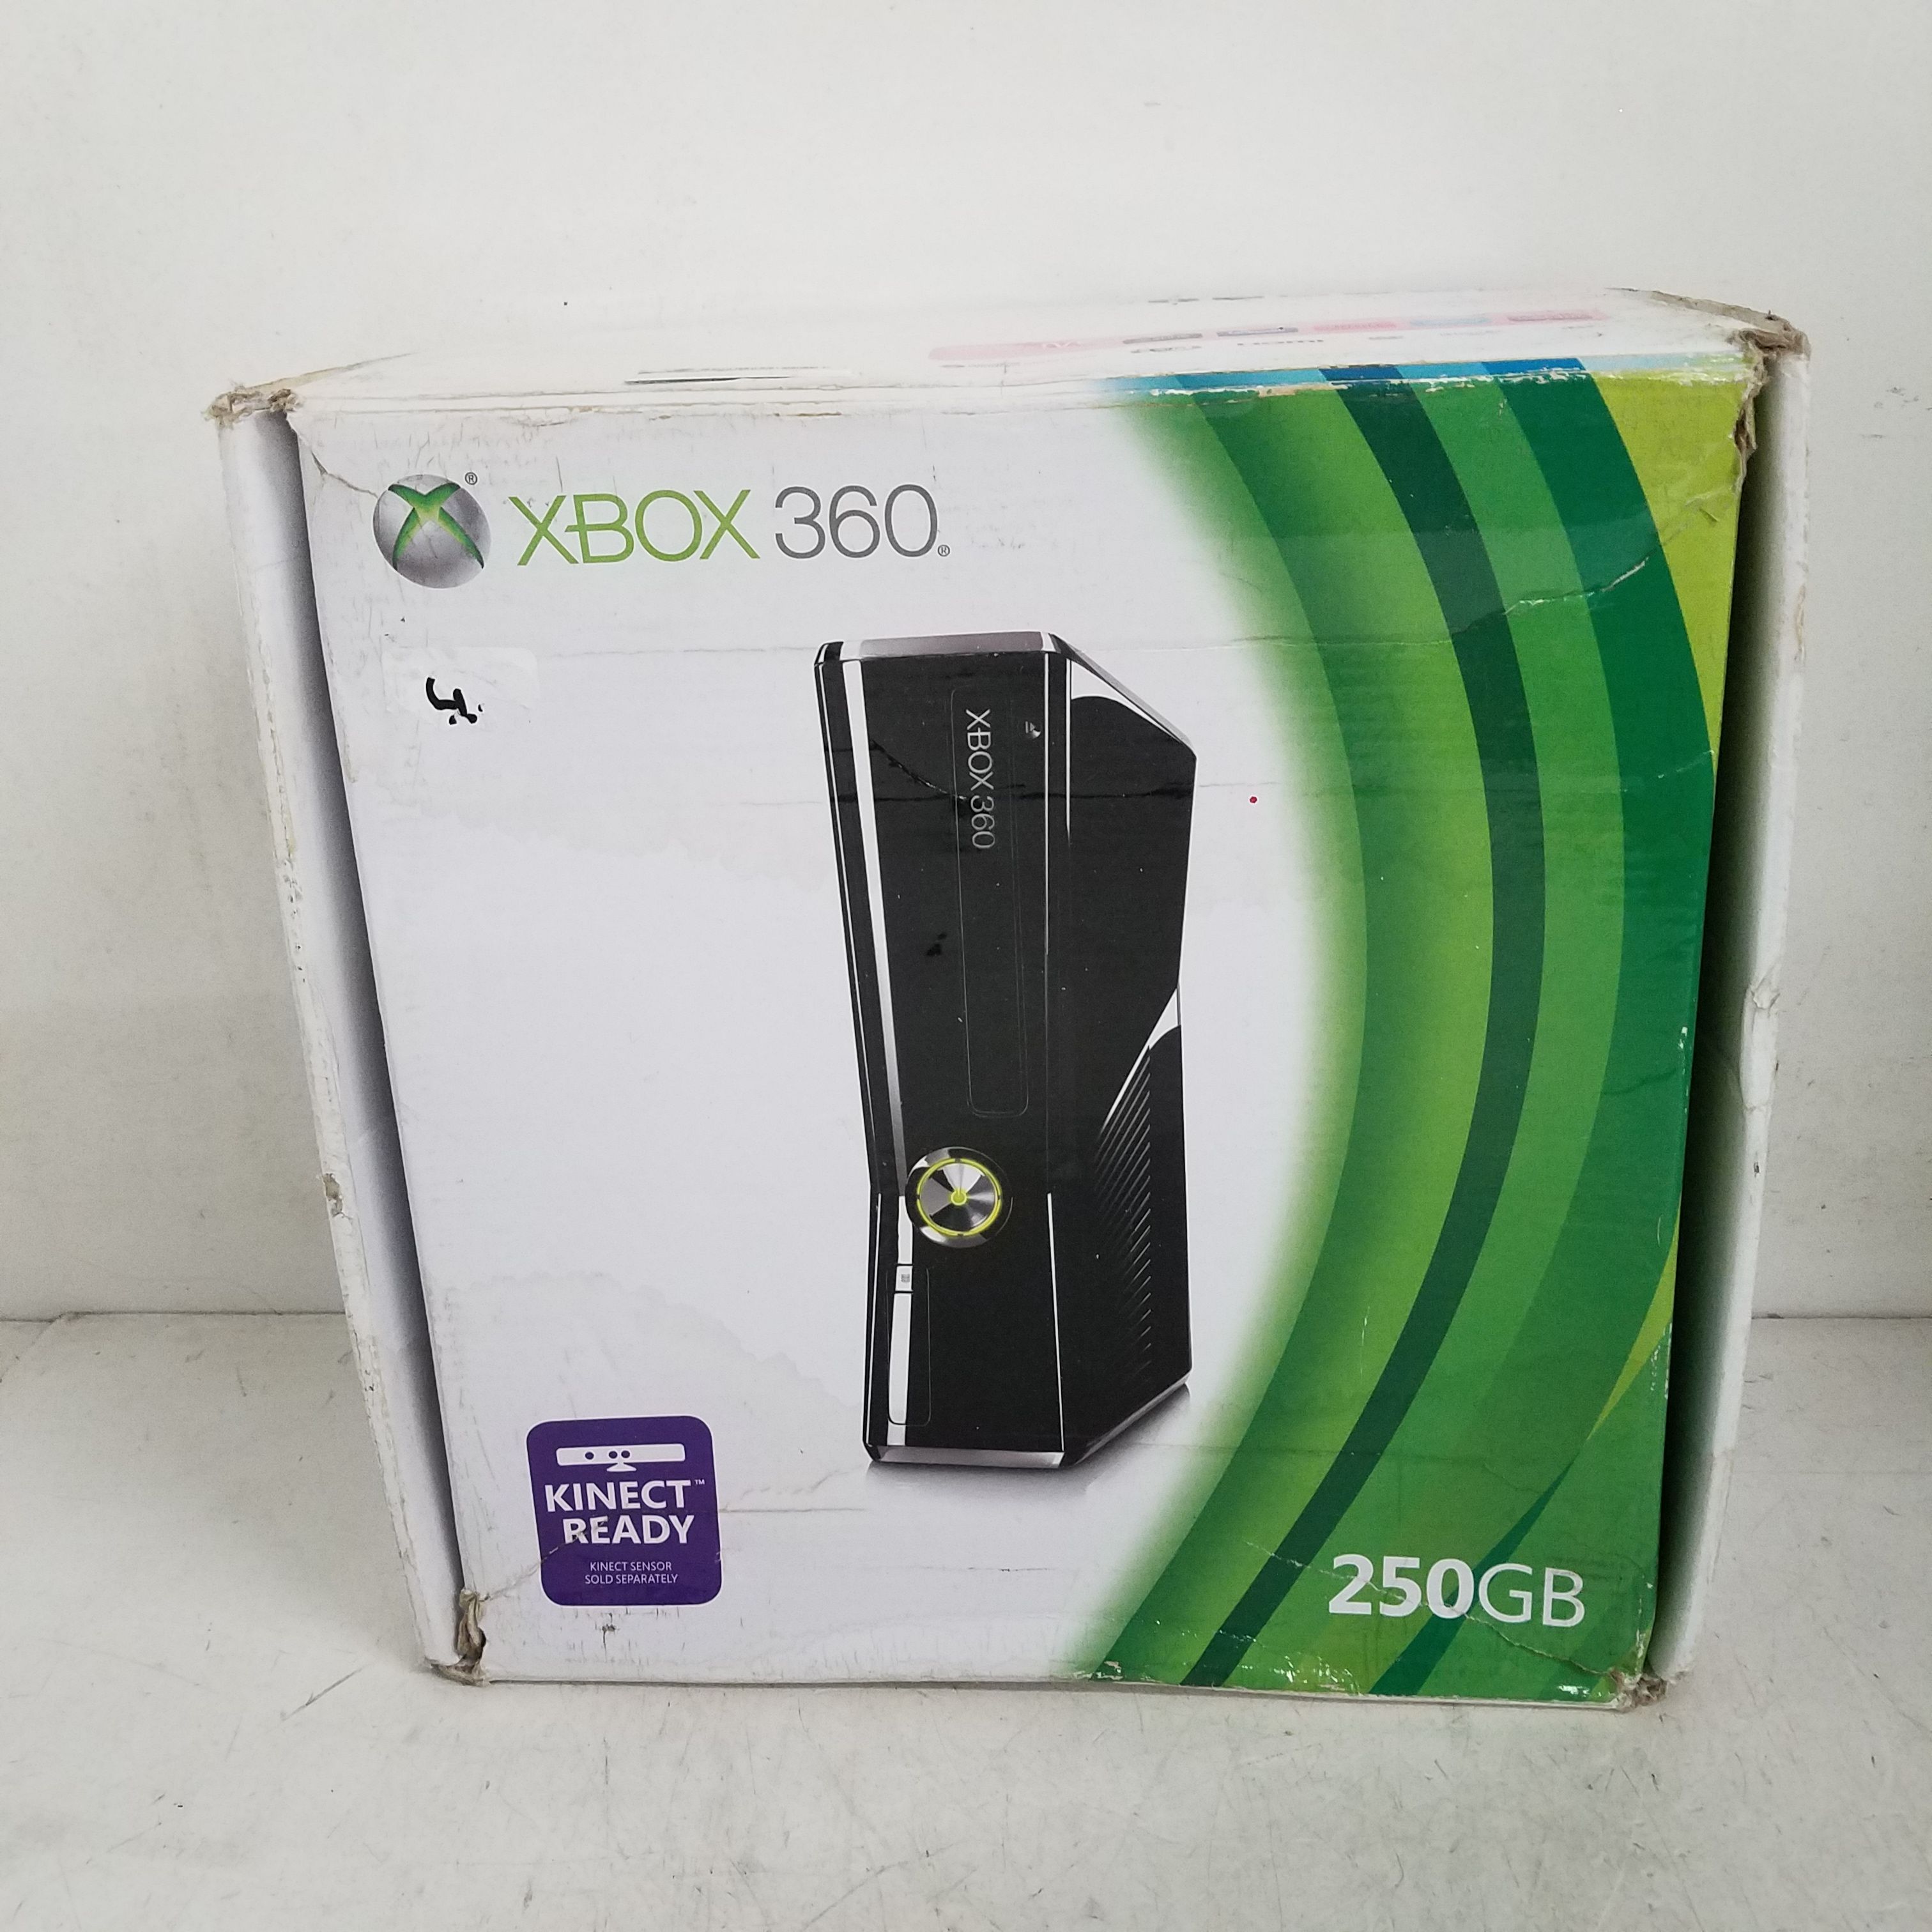  Xbox 360 250GB Holiday Value Bundle (OLD MODEL